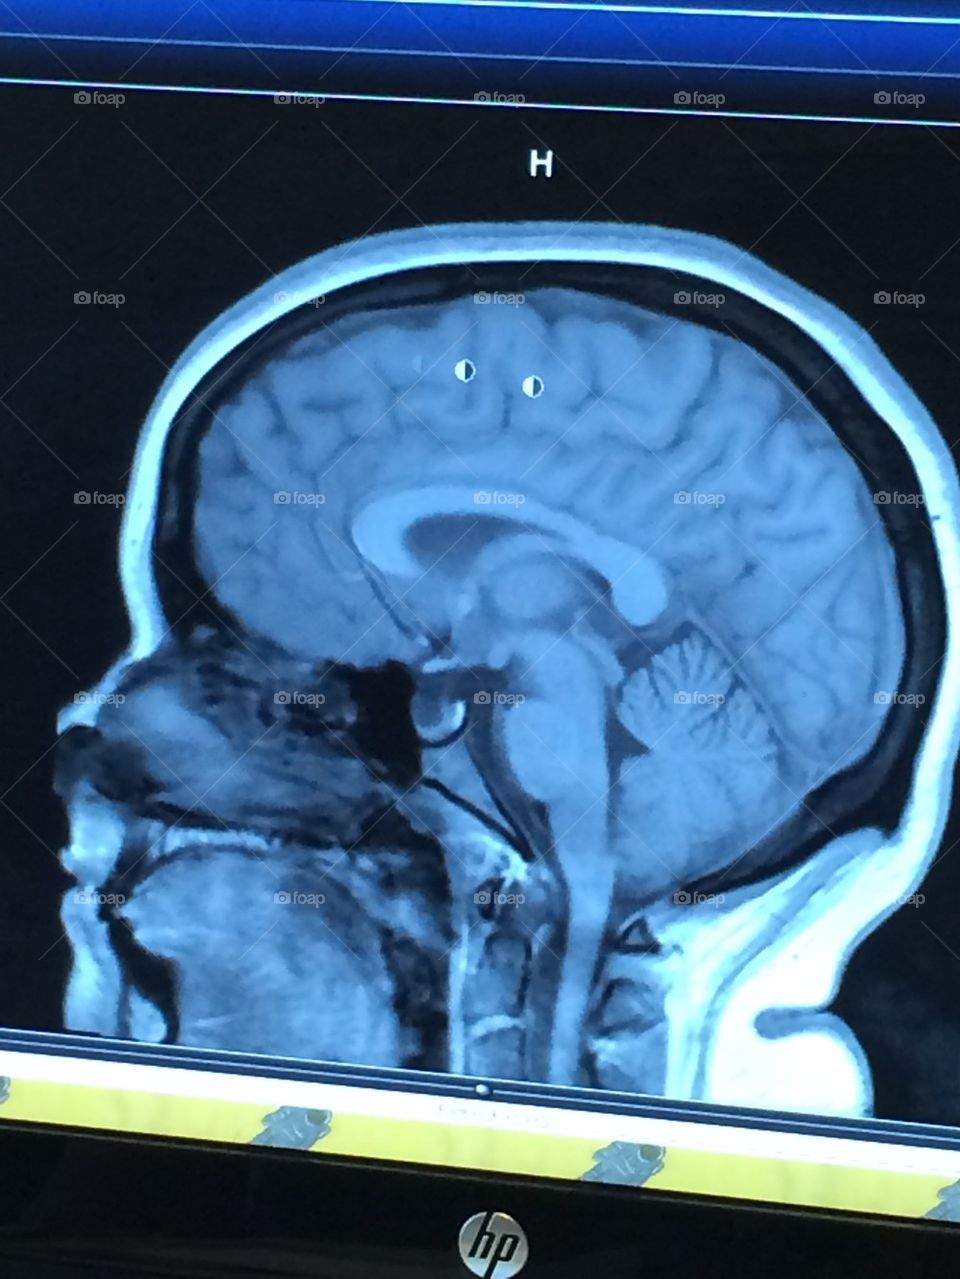 MRI Results 